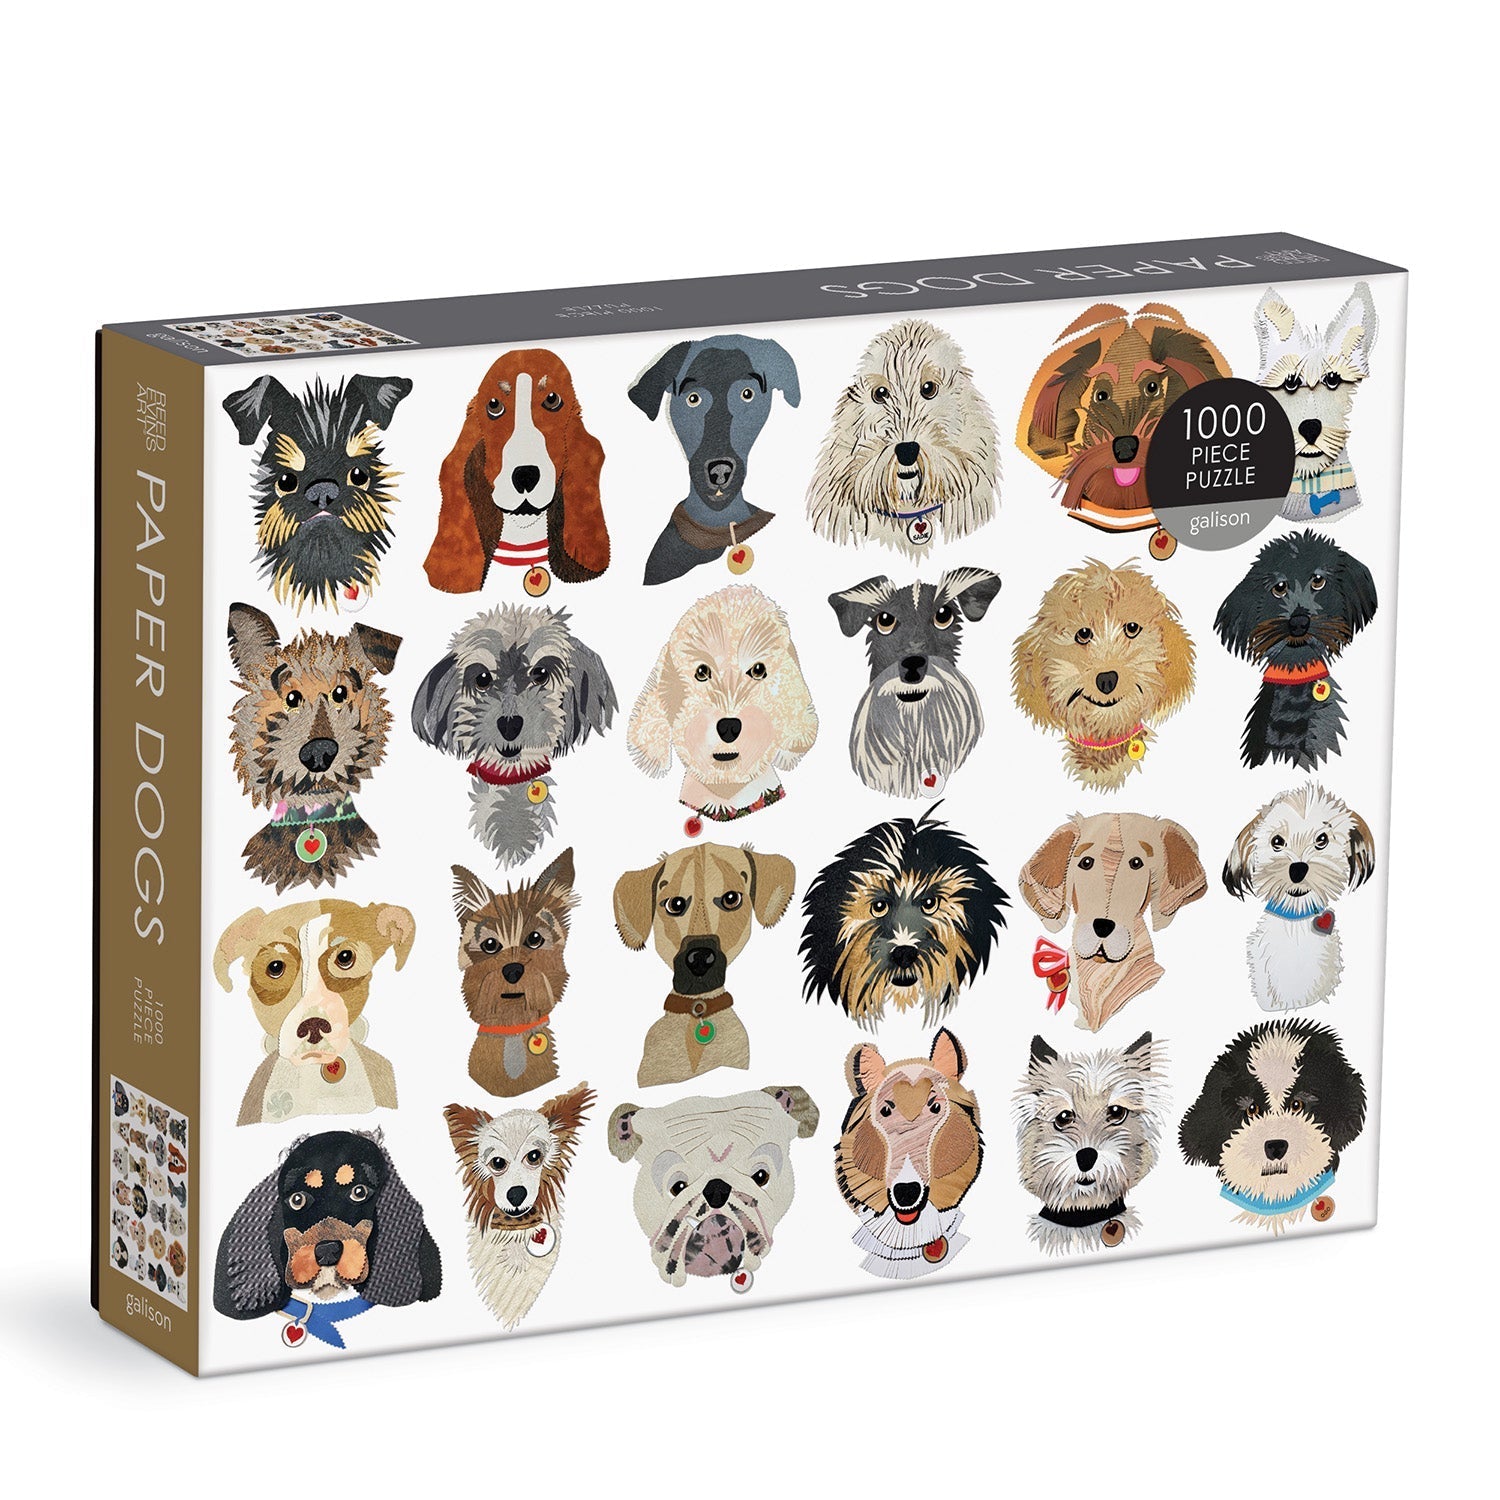 Furry Friends - 1,000 Piece Dog & Cat Jigsaw Puzzle - 1canoe2